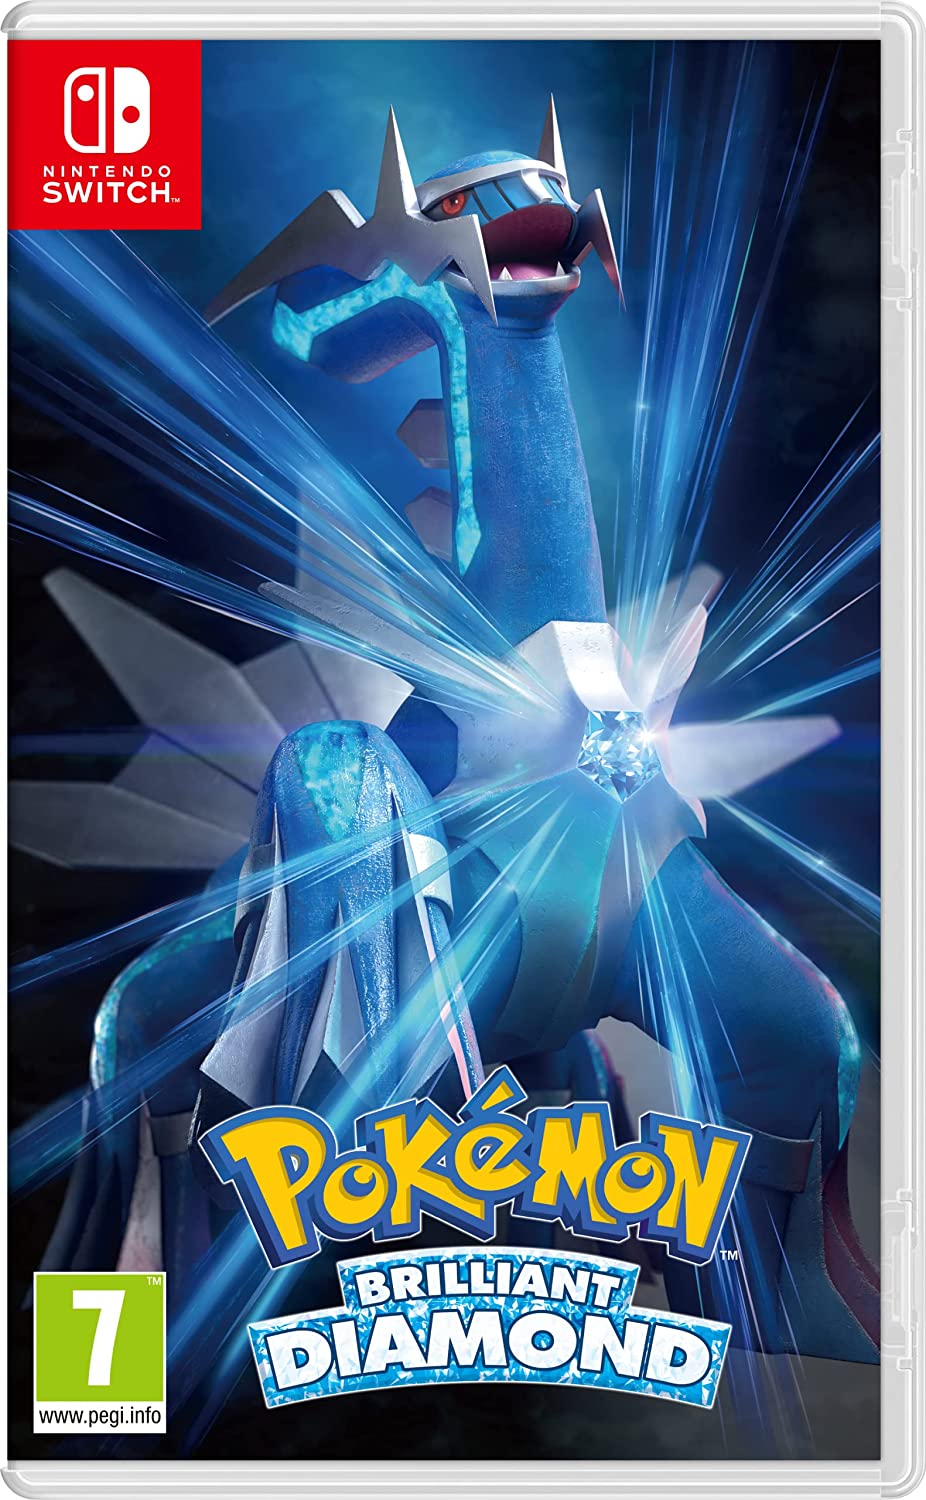 Cover art for Nintendo Switch game Pokémon Brilliant Diamond